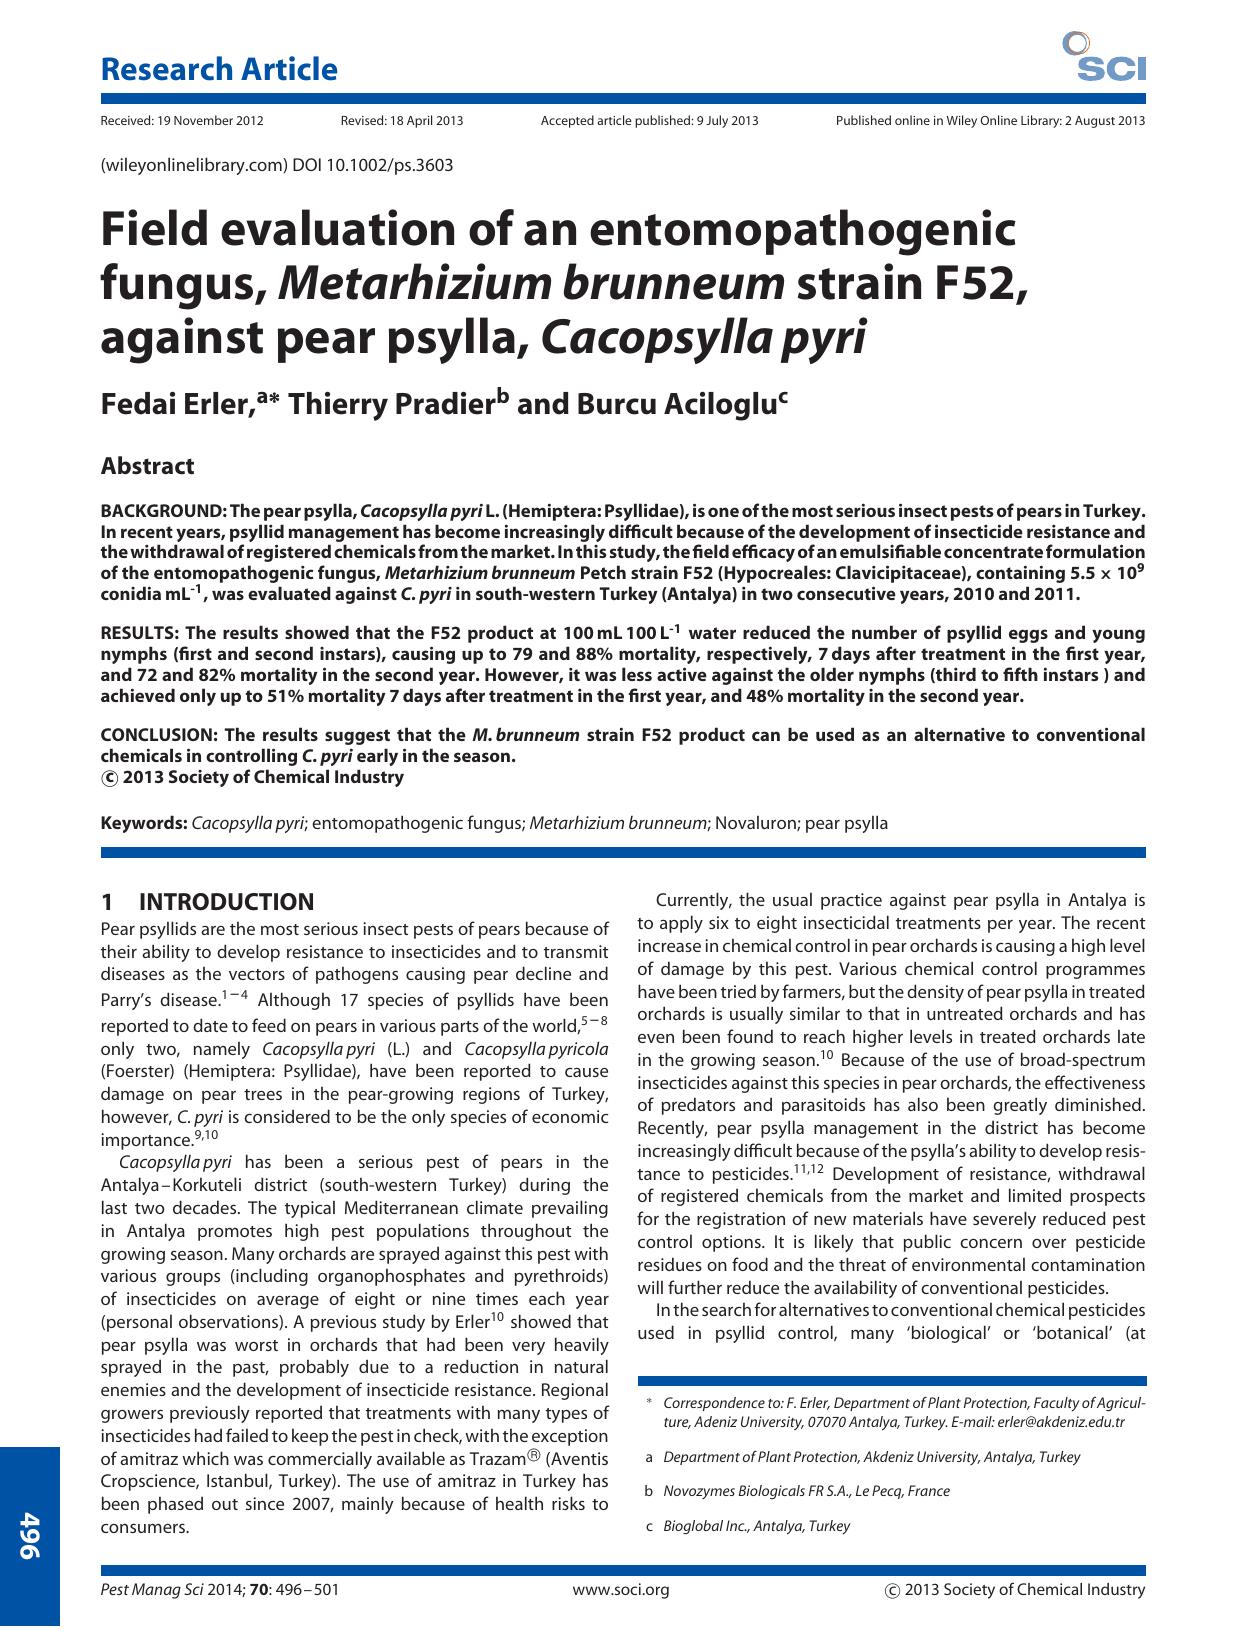 Field evaluation of an entomopathogenic fungus, Metarhiziumbrunneum strain F52, against pear psylla, Cacopsyllapyri by Unknown